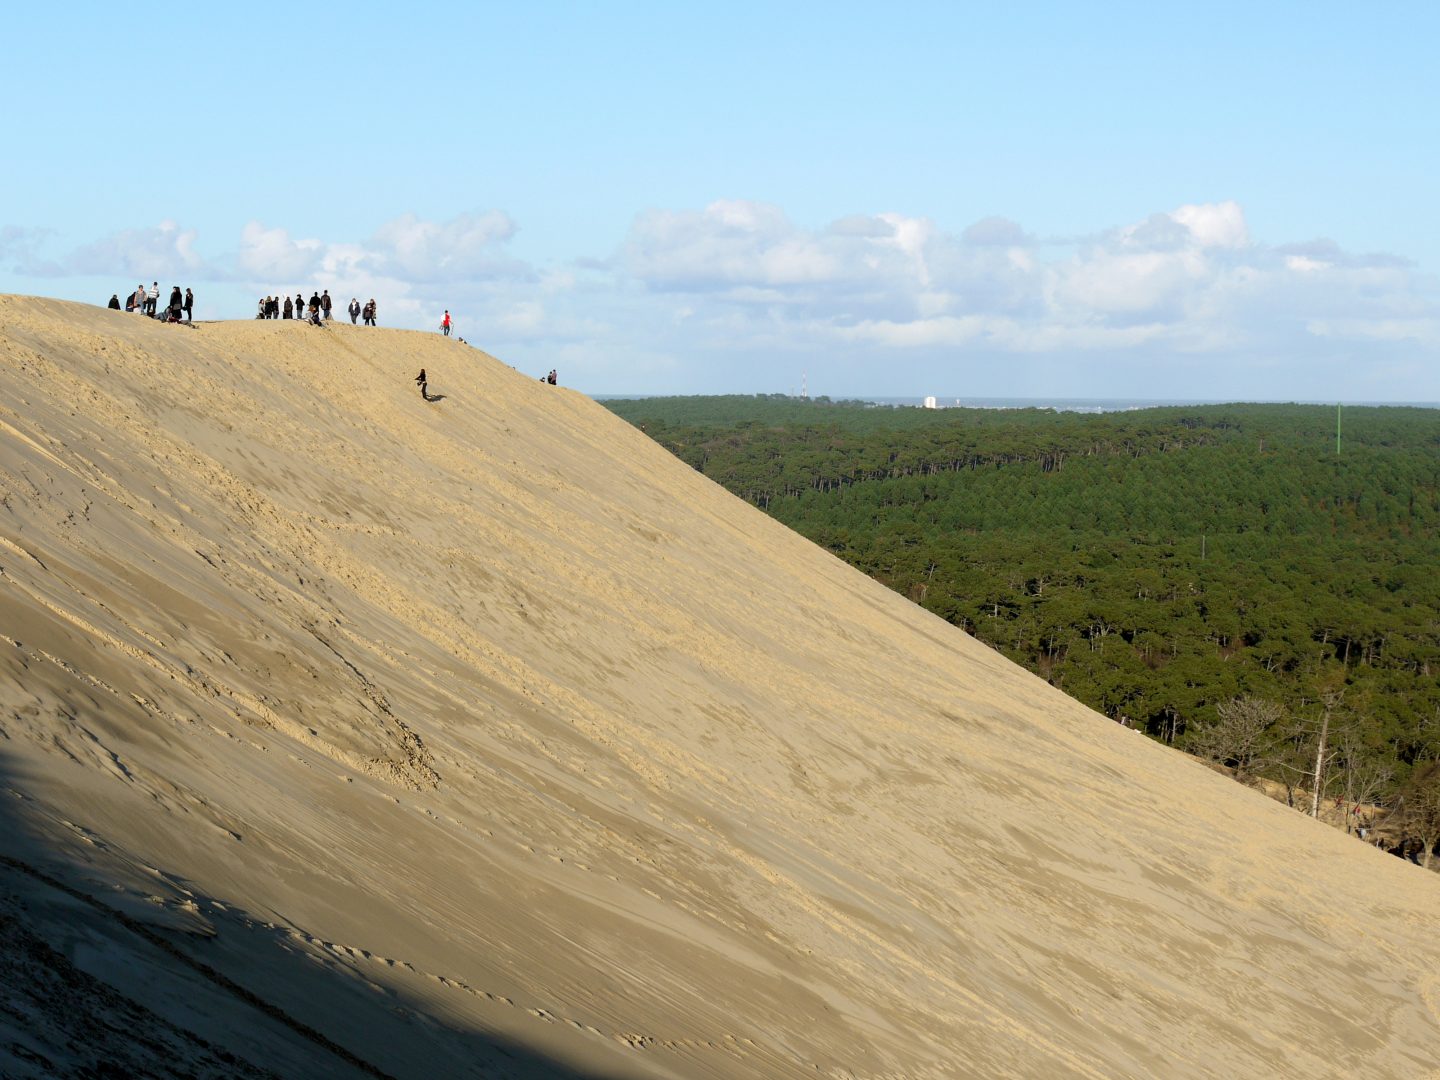 The Dune of Pilat